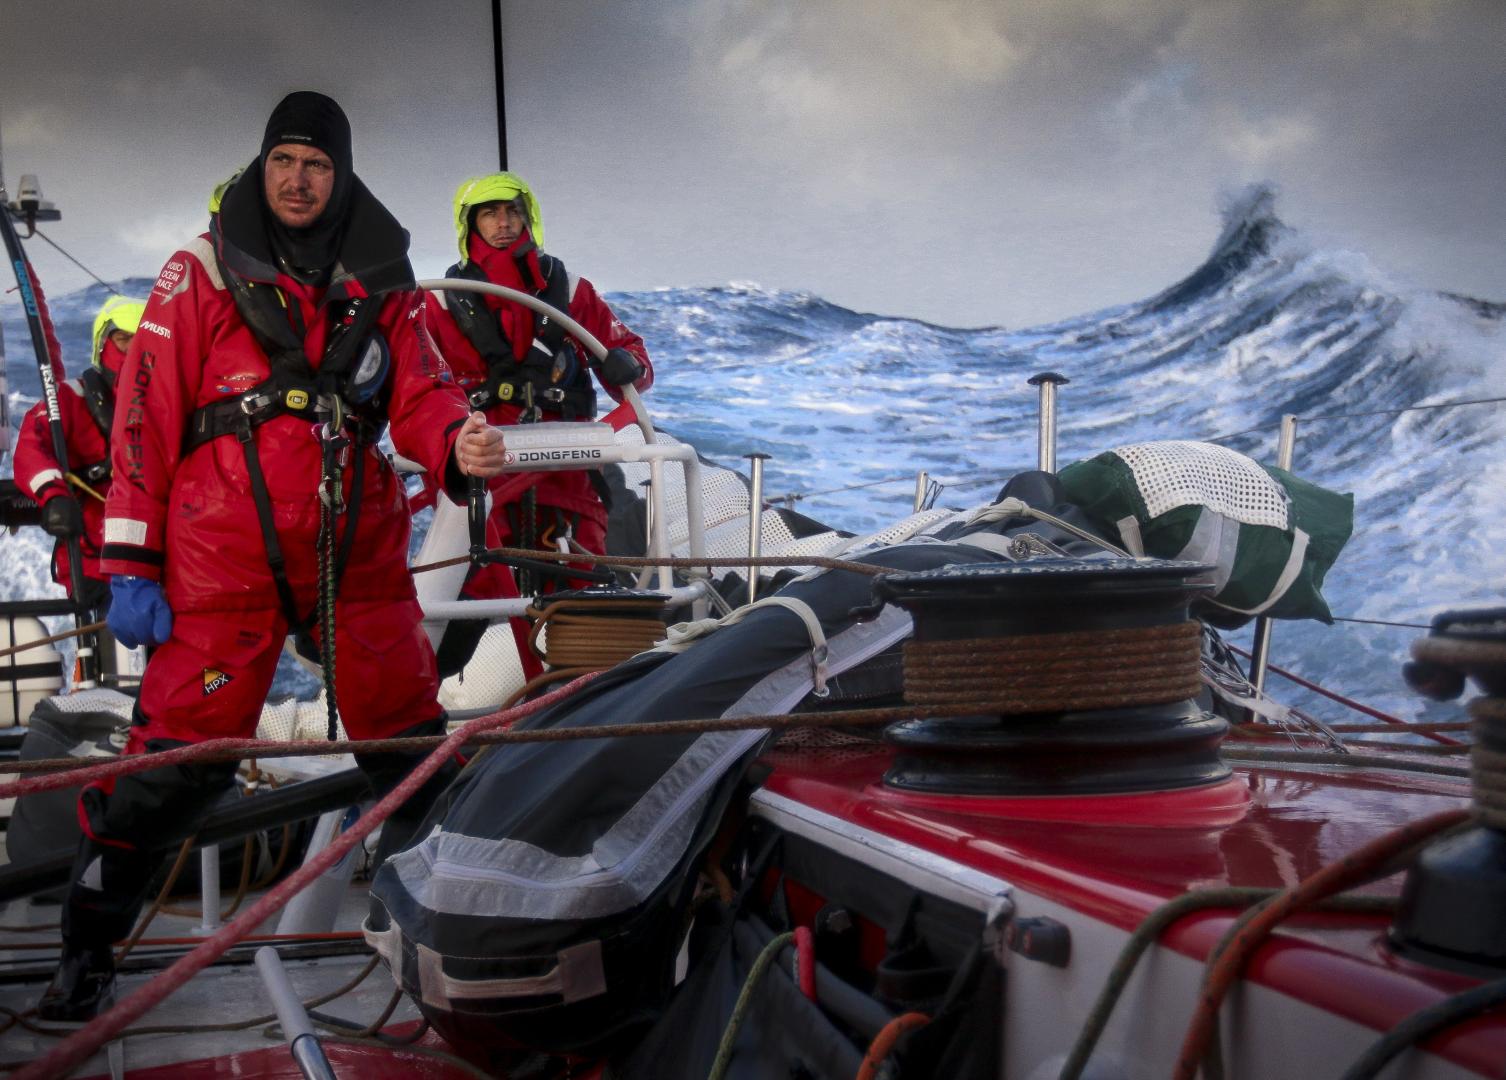 Volvo Ocean Race strengthens Southern Ocean commitment